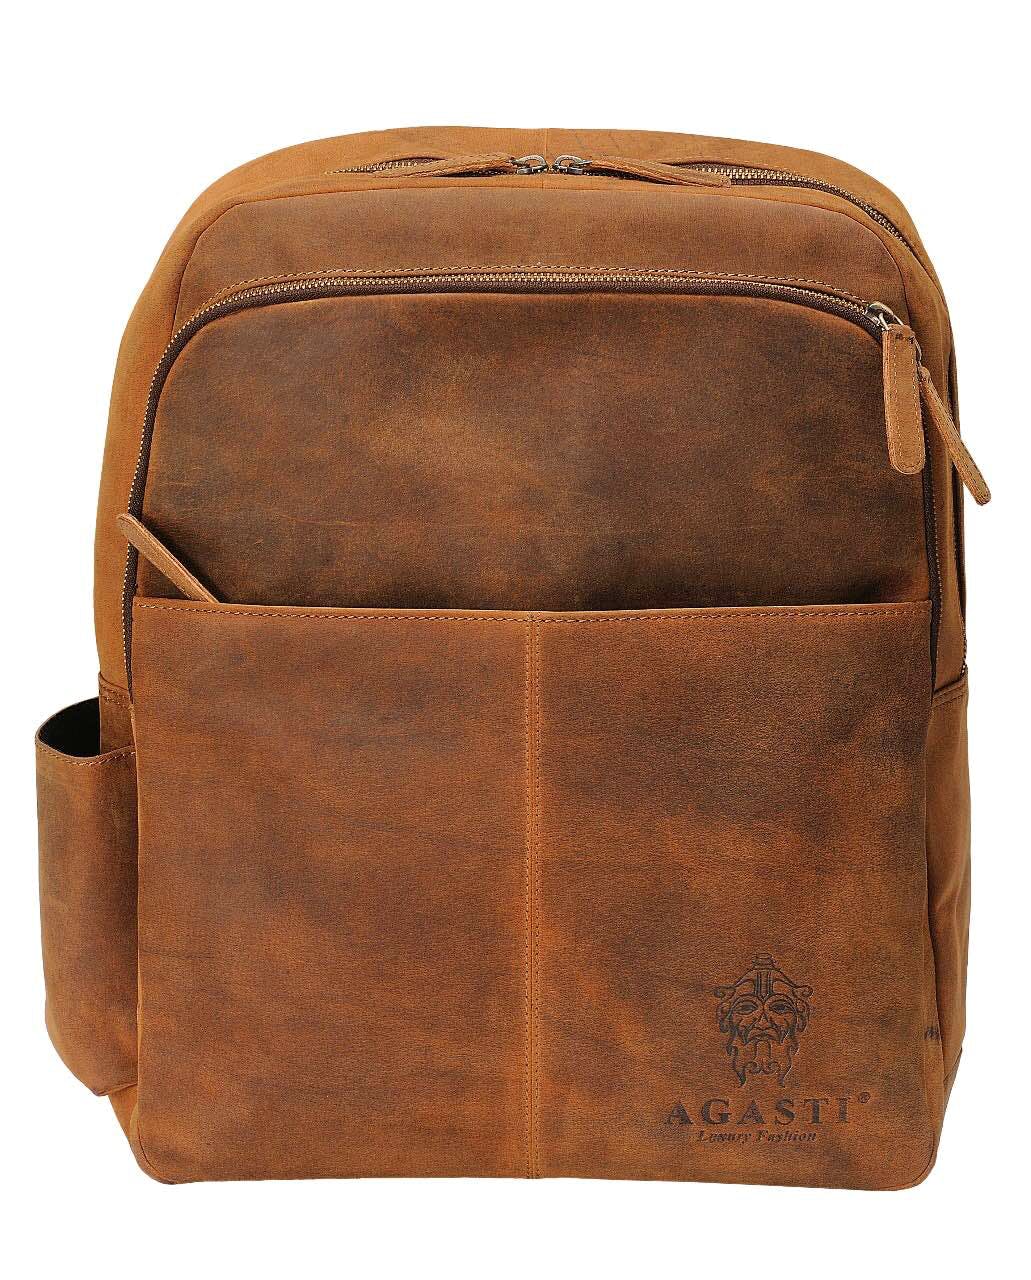 Bag,Tan,Brown,Leather,Beige,Luggage and bags,Backpack,Fashion accessory,Messenger bag,Handbag